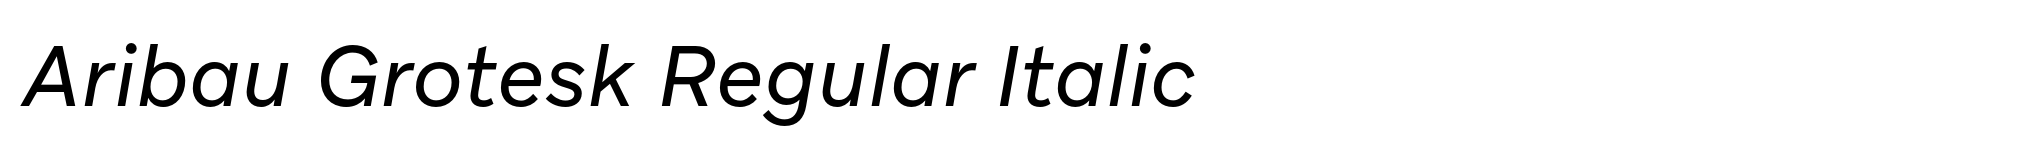 Aribau Grotesk Regular Italic image